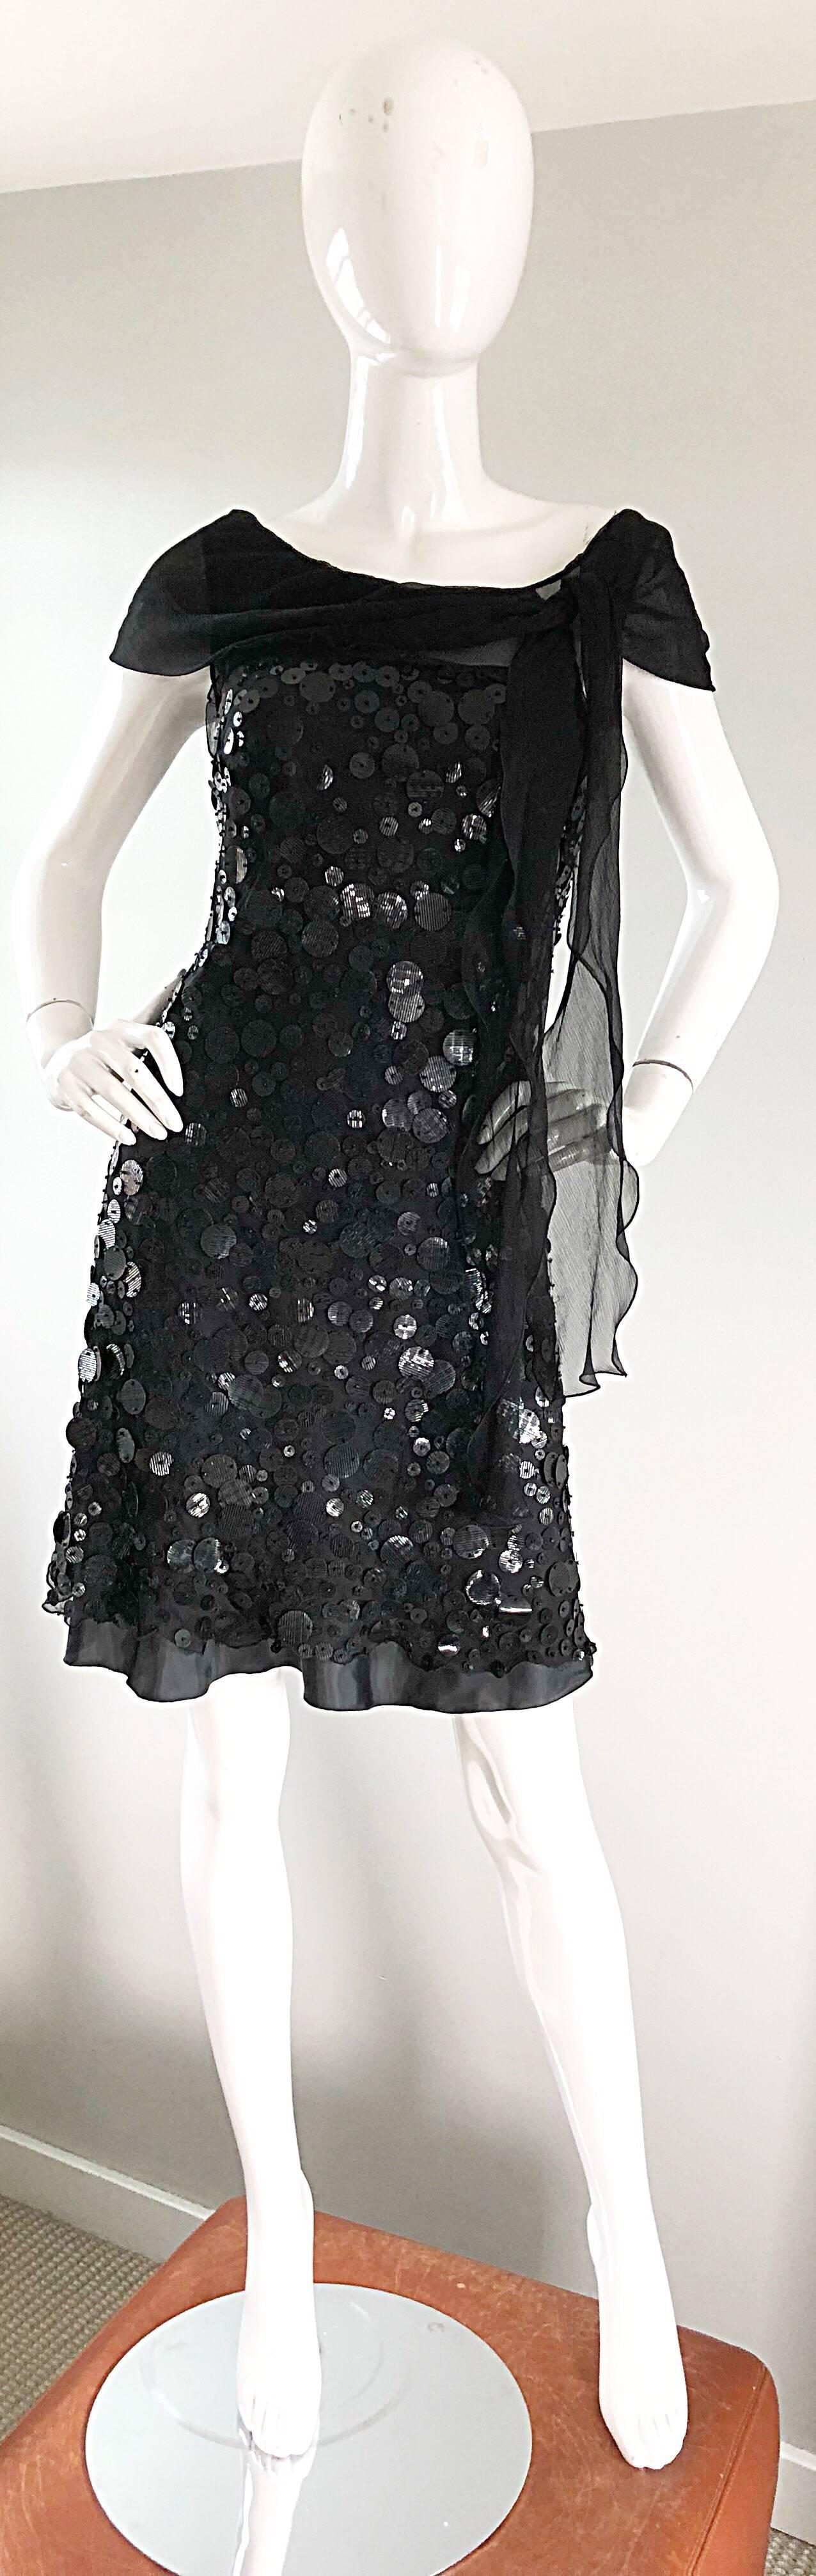 Moschino Cheap & Chic 1990s Black Size 6 Chiffon Paillettes Sequin Vintage Dress For Sale 4